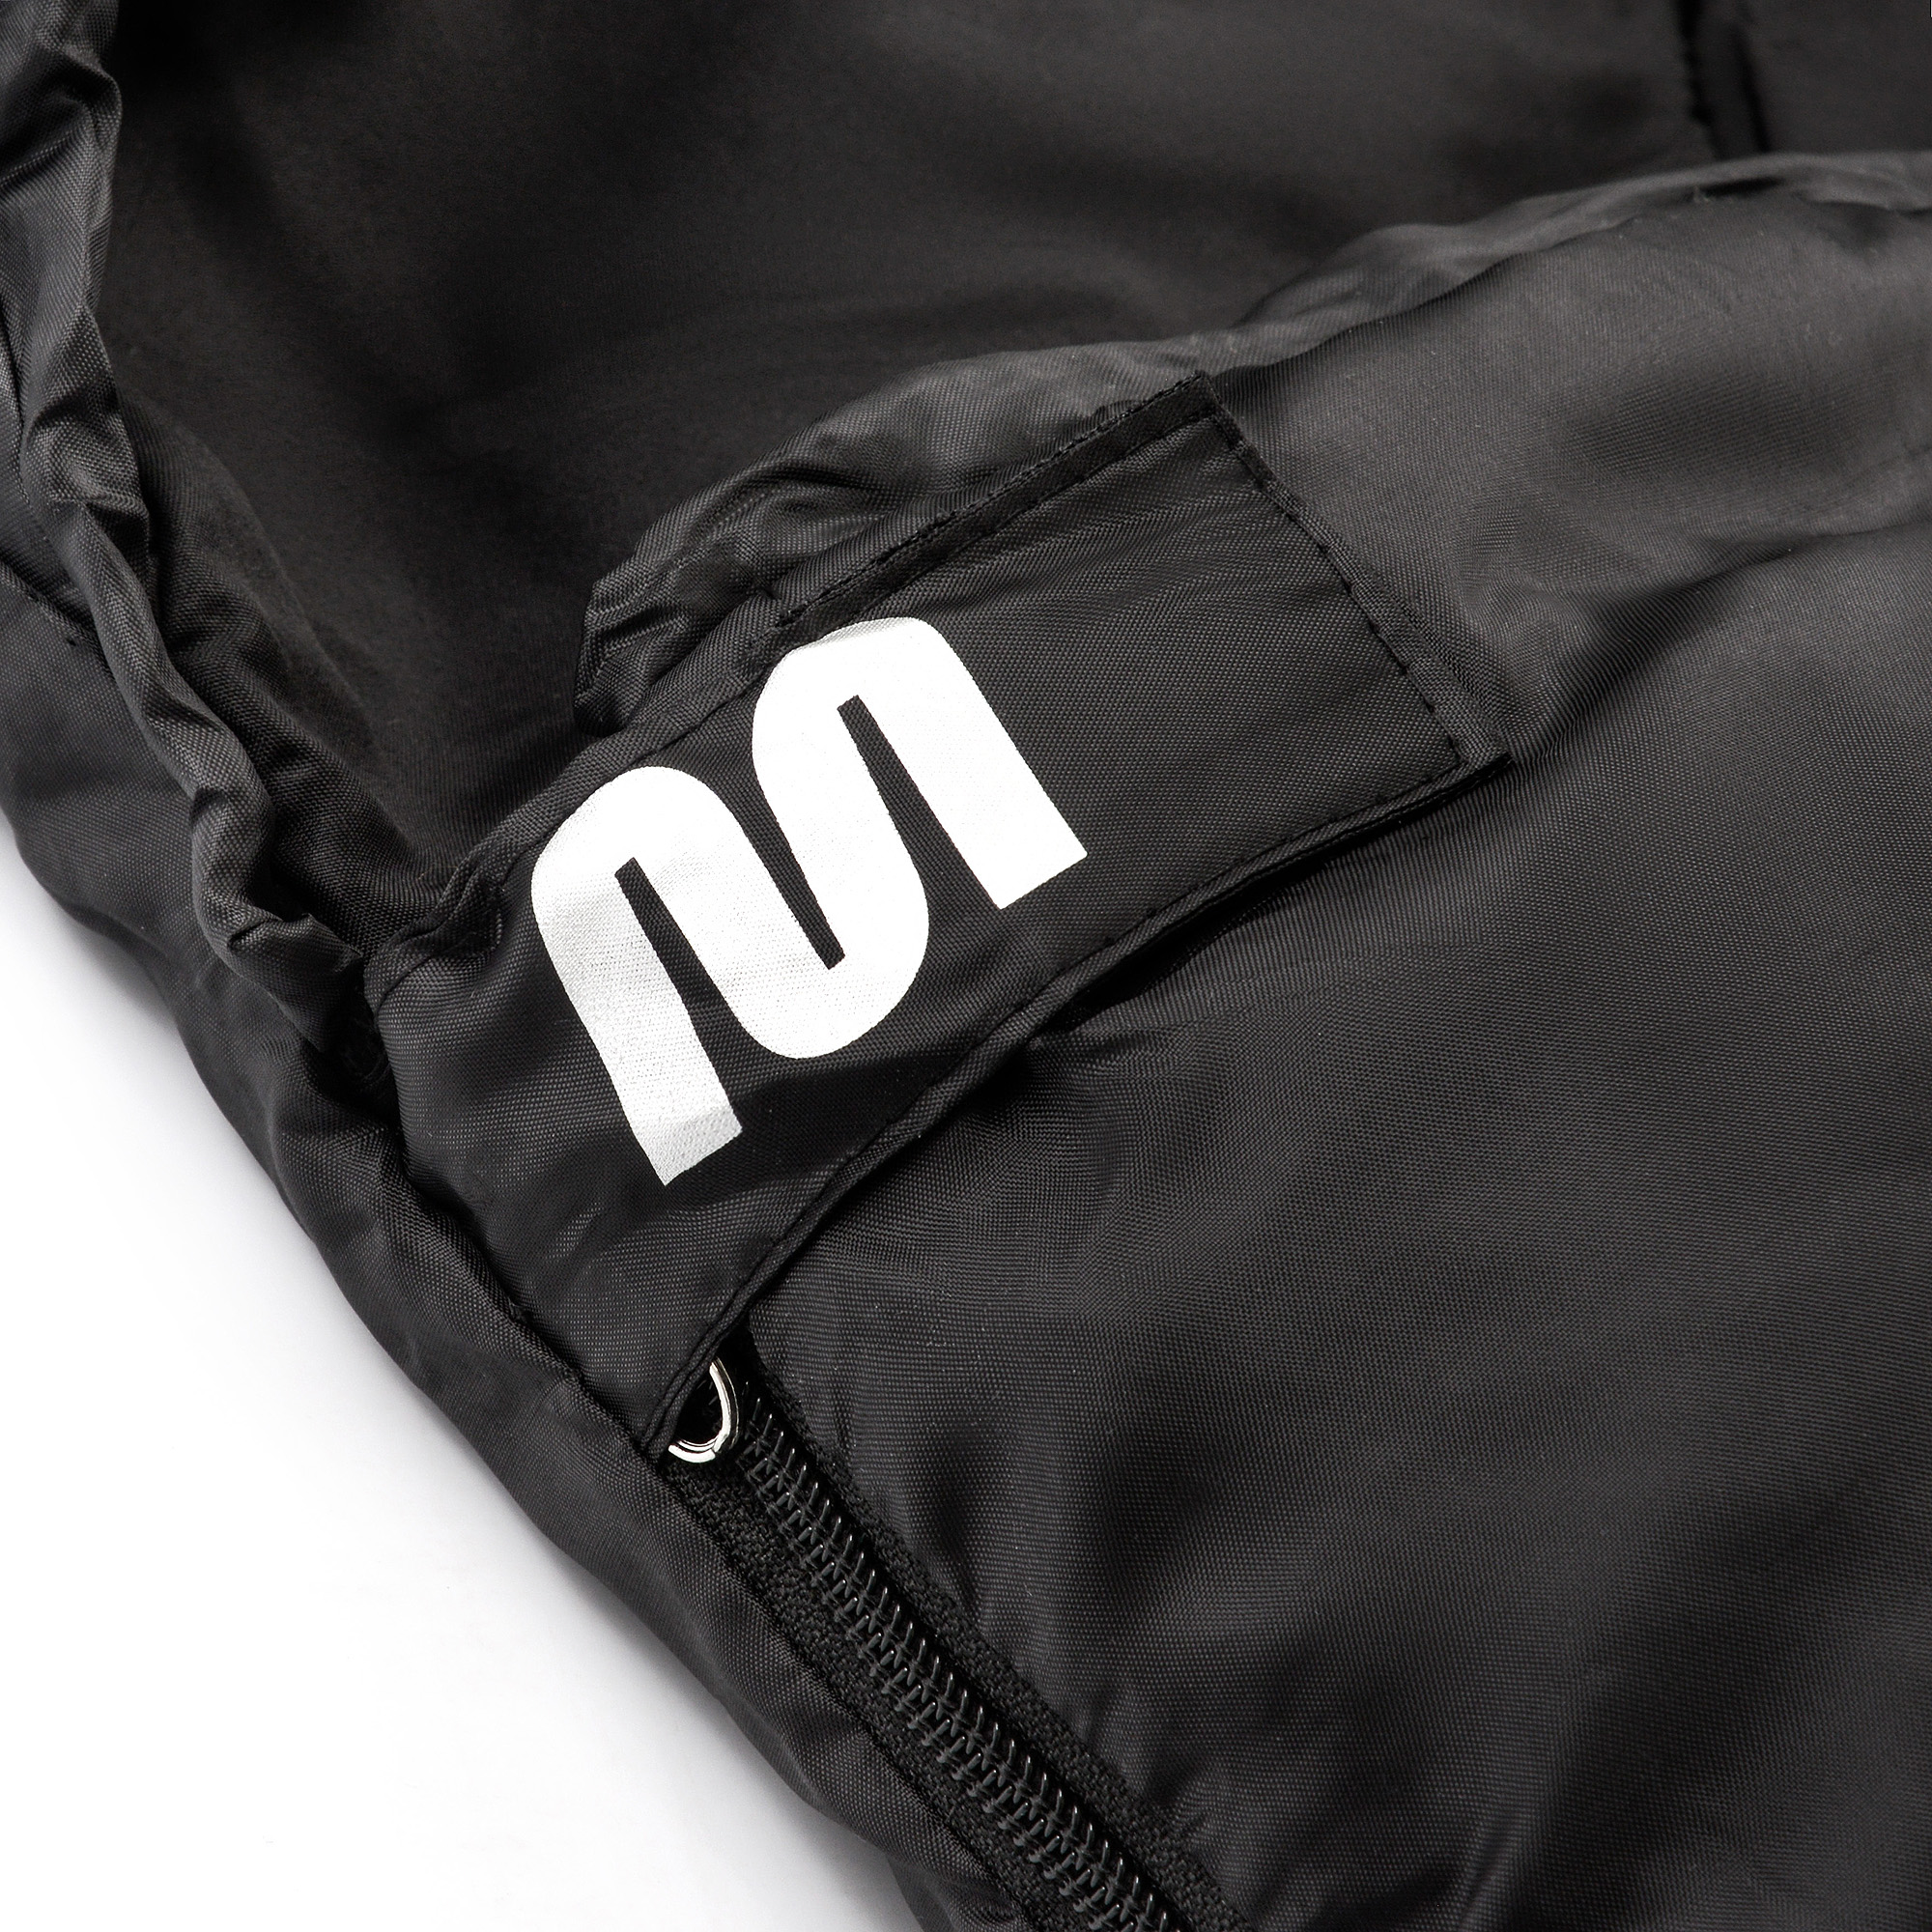 Meteor Dreamer Pro R sleeping bag black | TOURISM \ SLEEPING BAGS ...